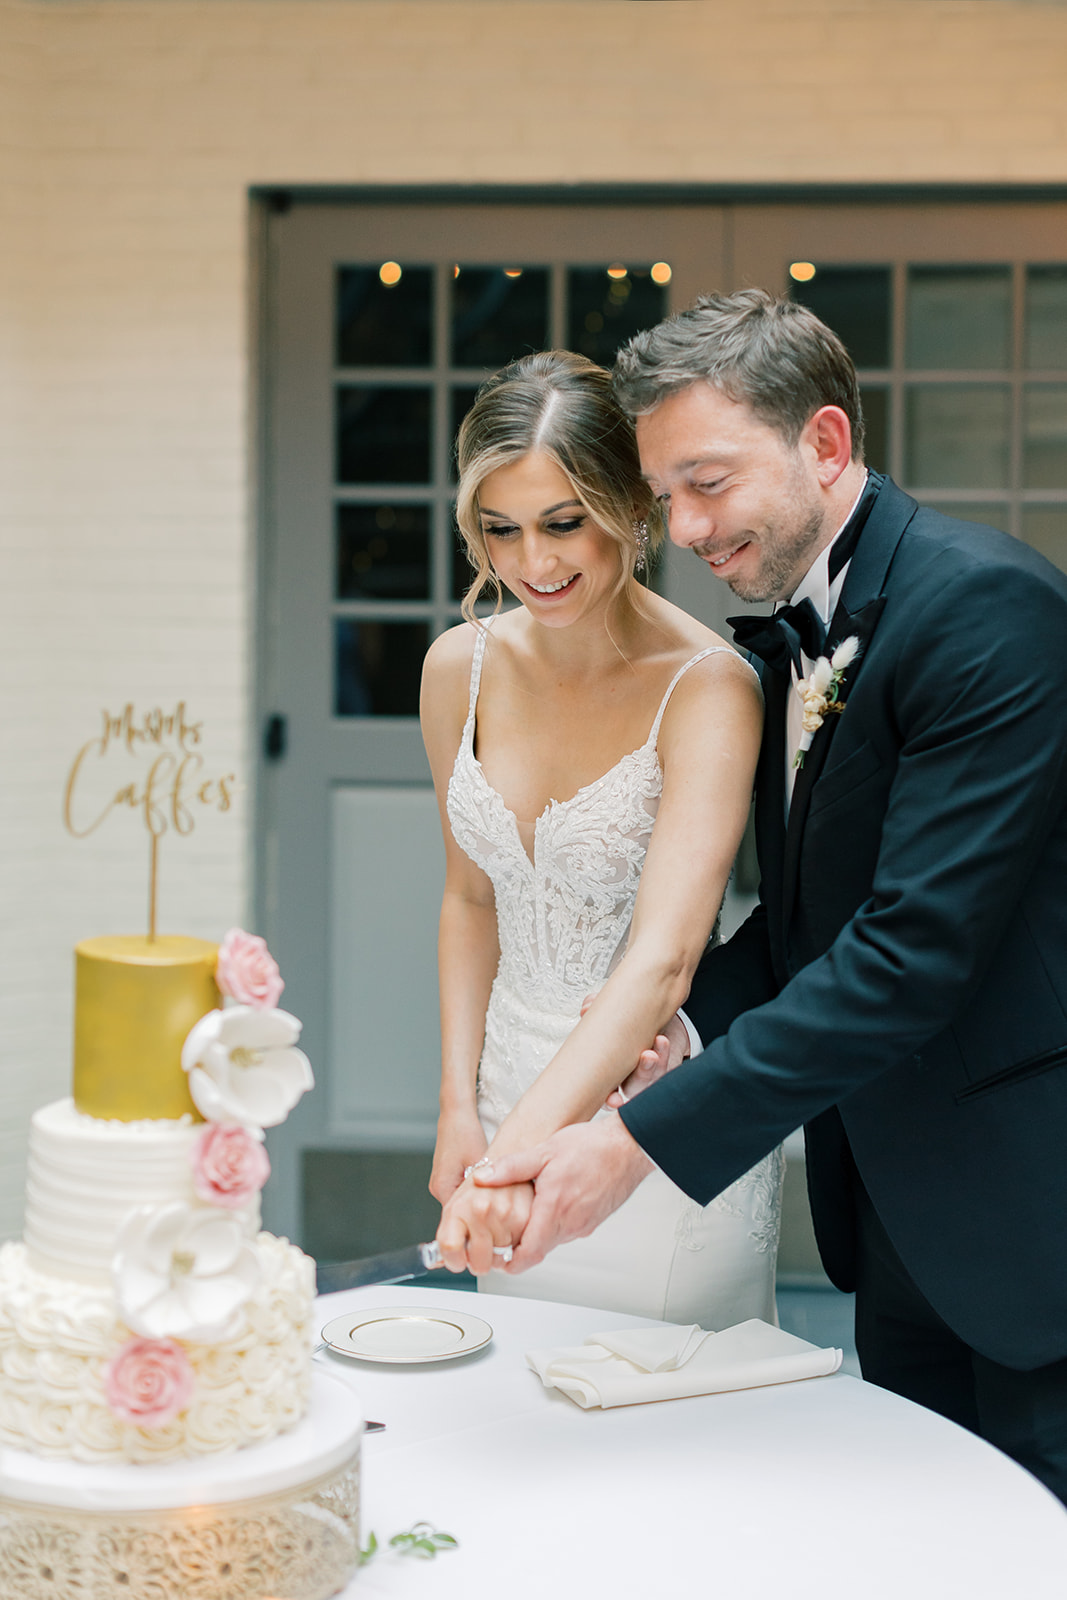 Bride and groom cut their wedding cake. 